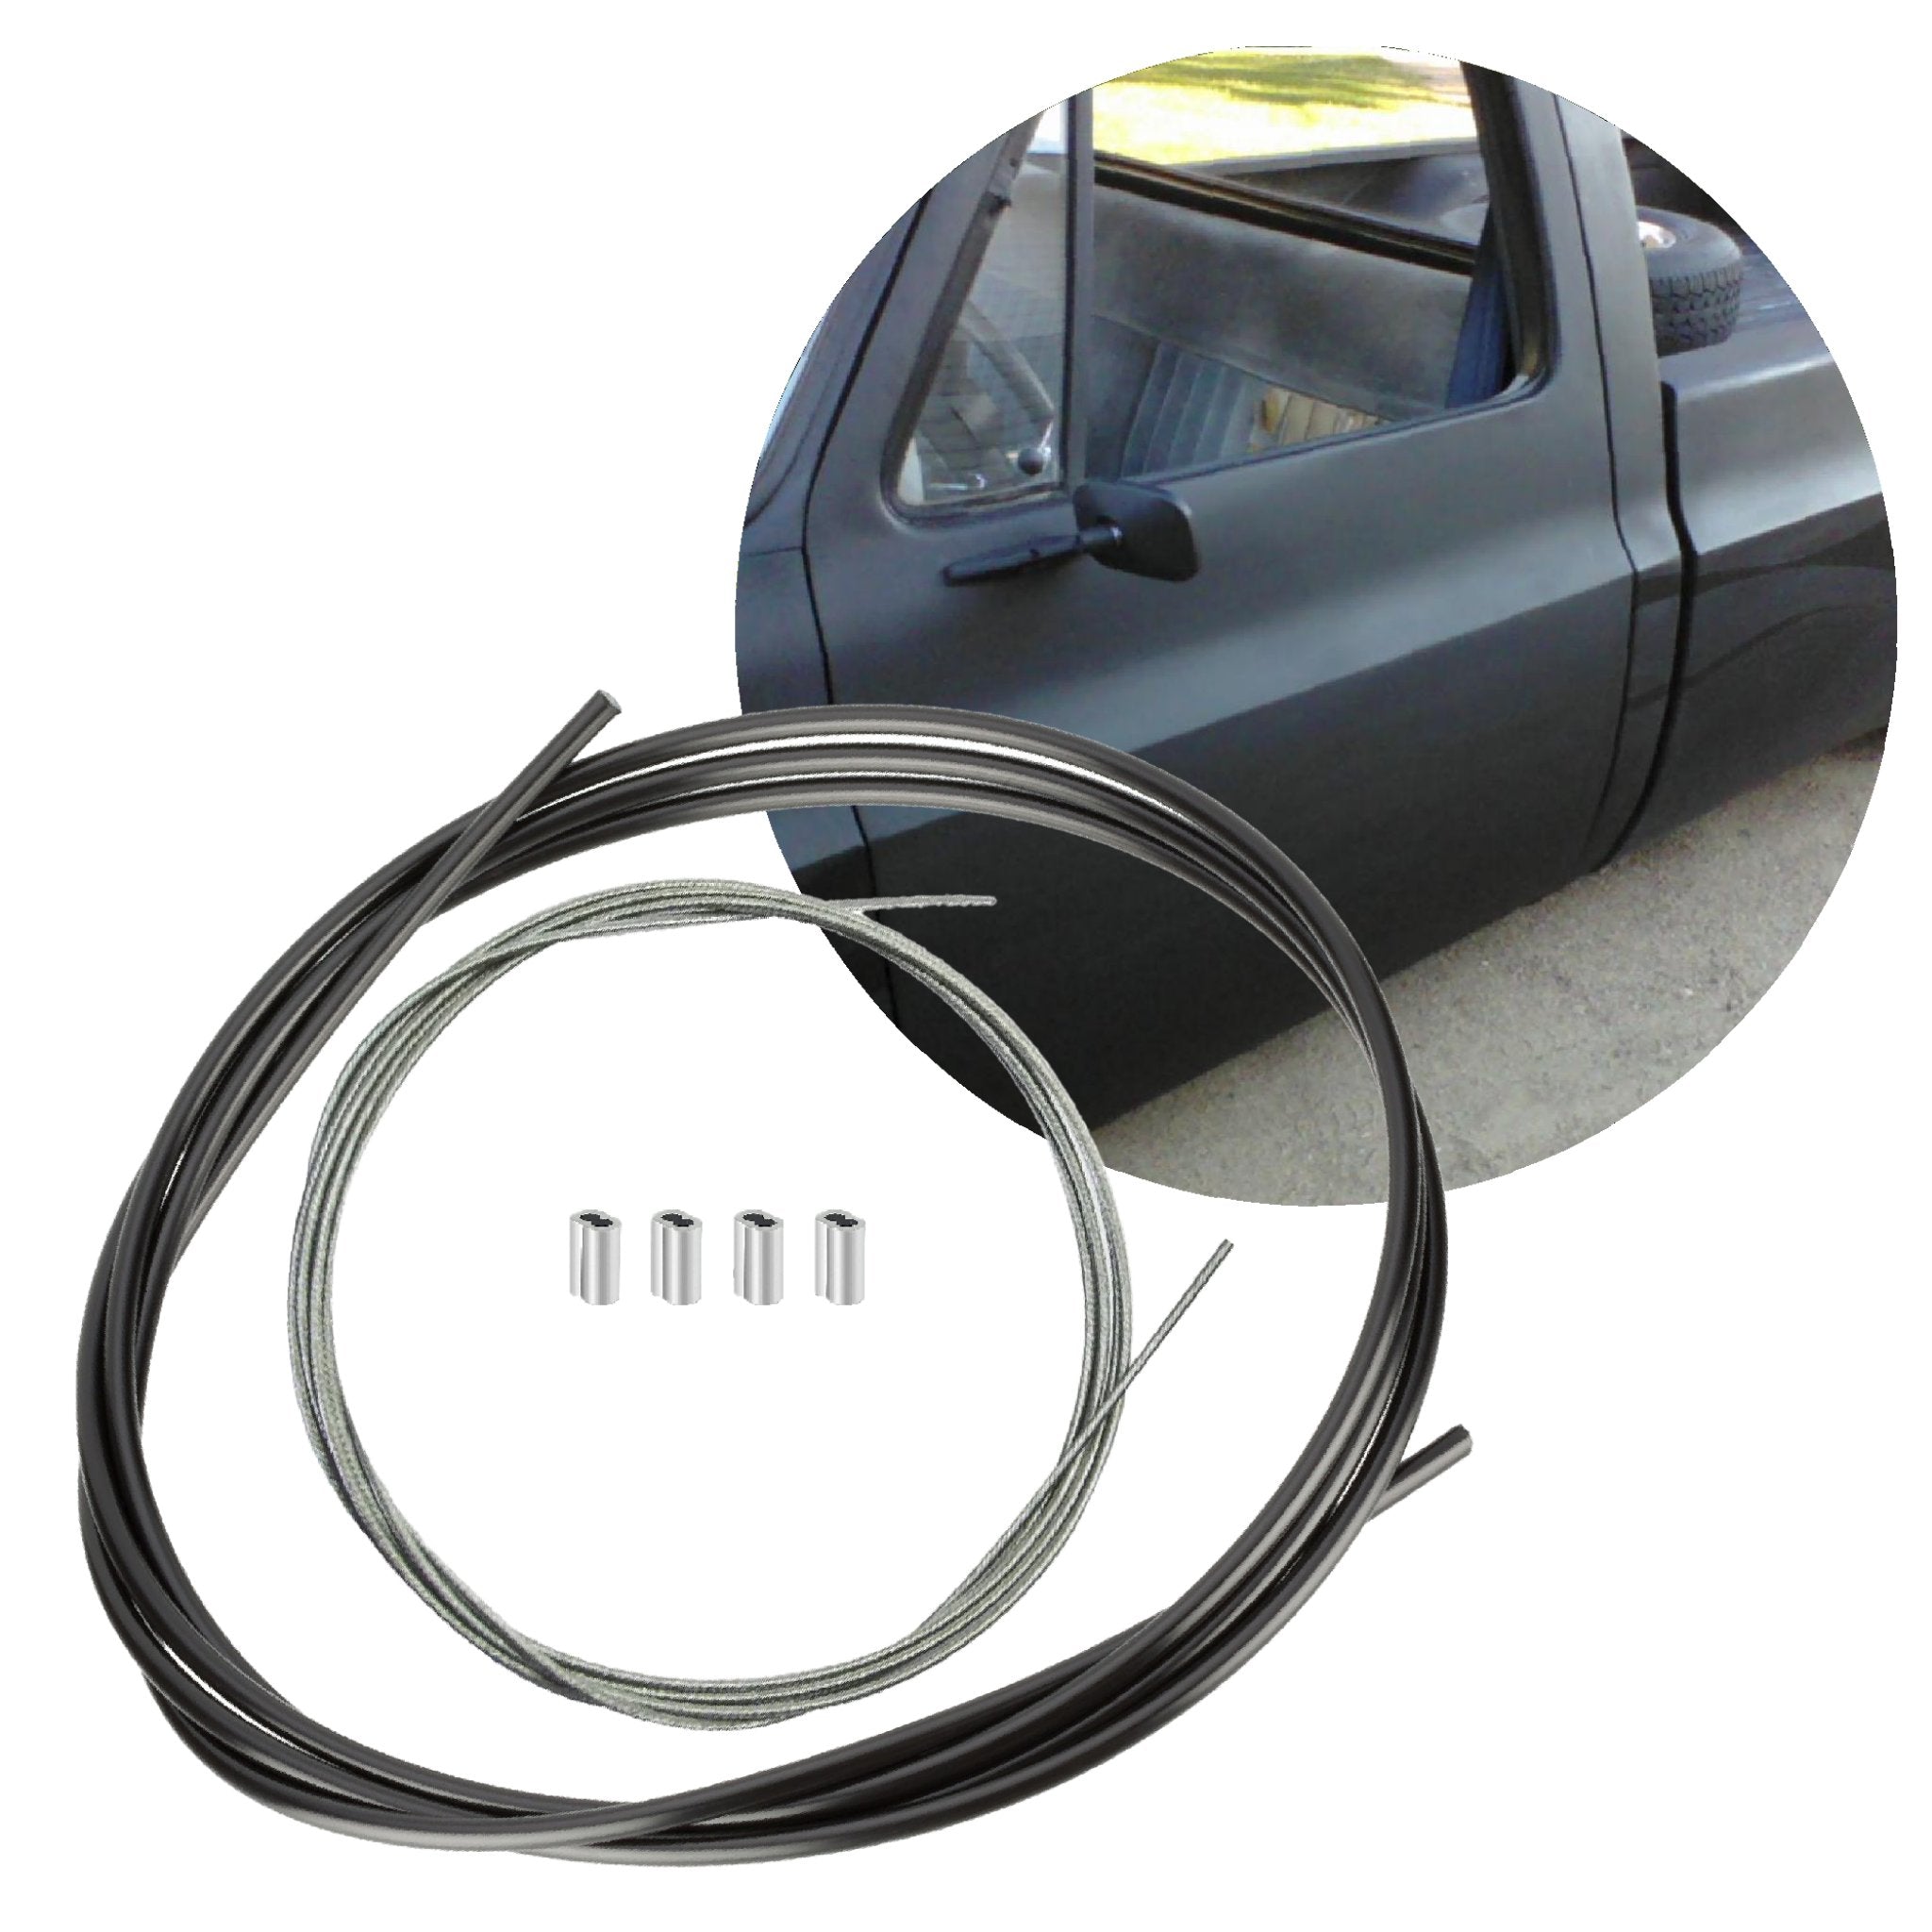 Kit de extensión de cable de 10' con carcasa para pestillo de solenoide para capó de puerta afeitada de automóvil